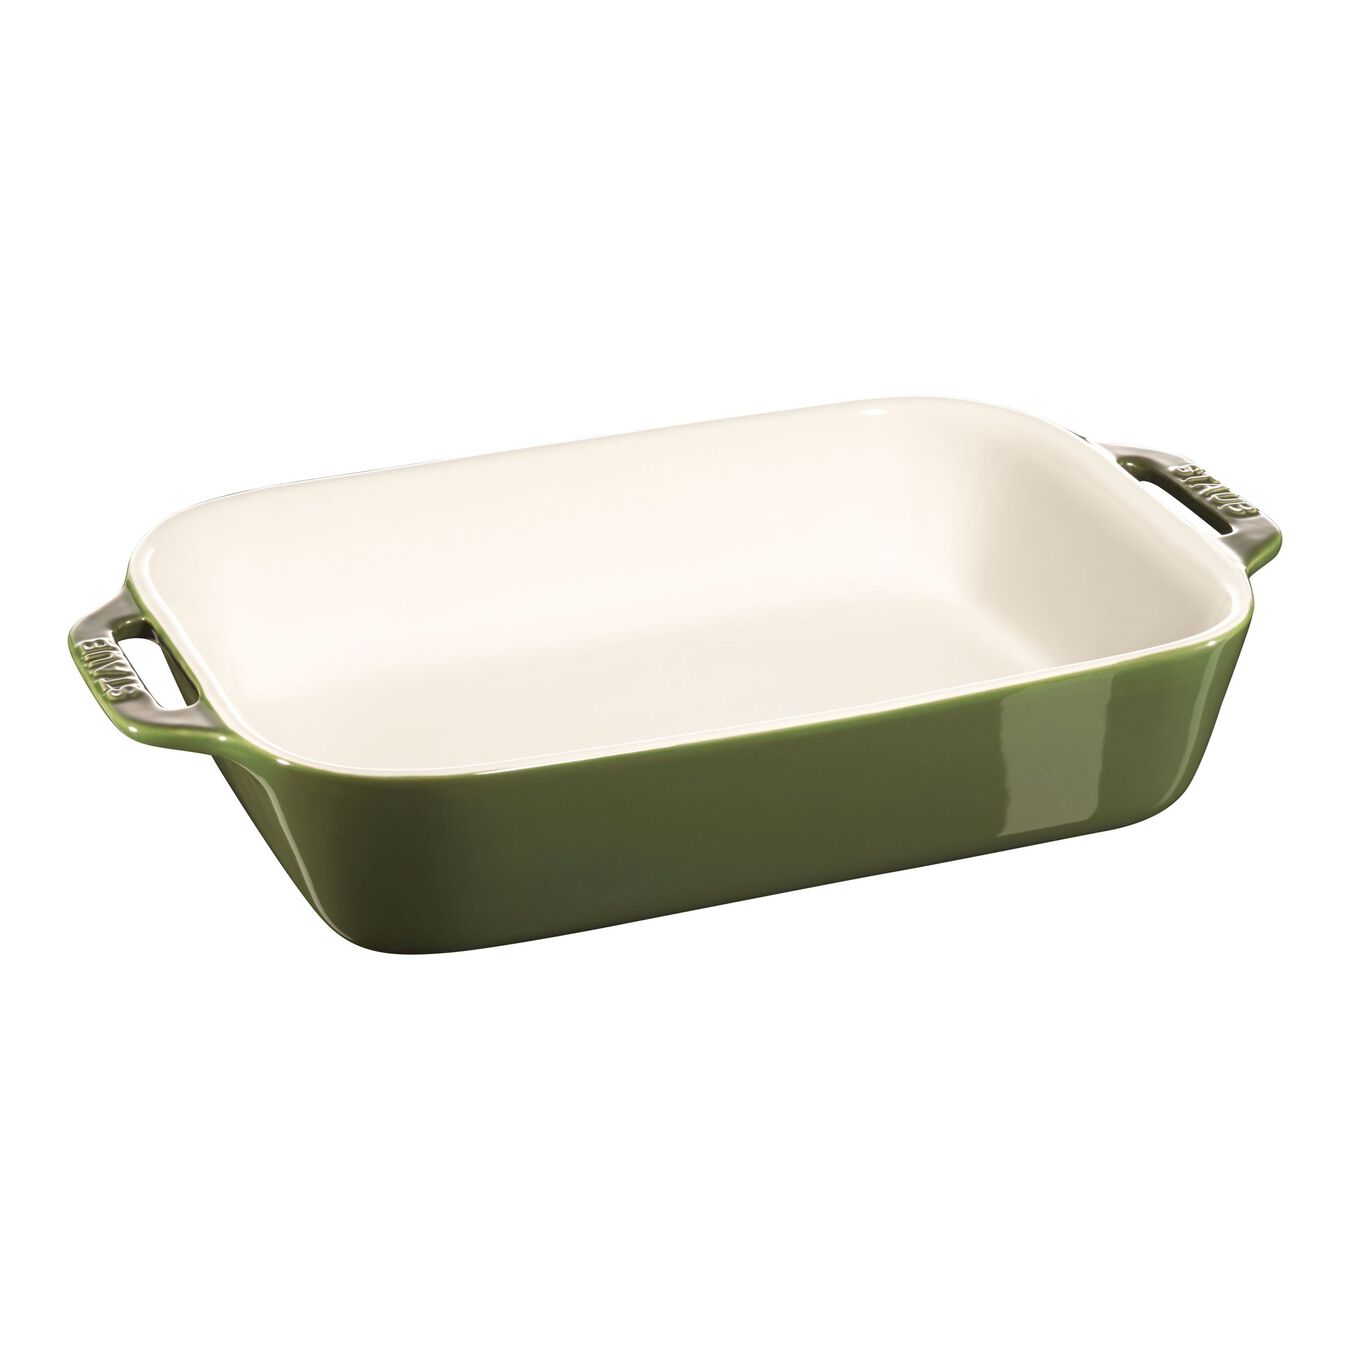 27 cm x 20 cm rectangular Ceramic Oven dish basil-green,,large 1